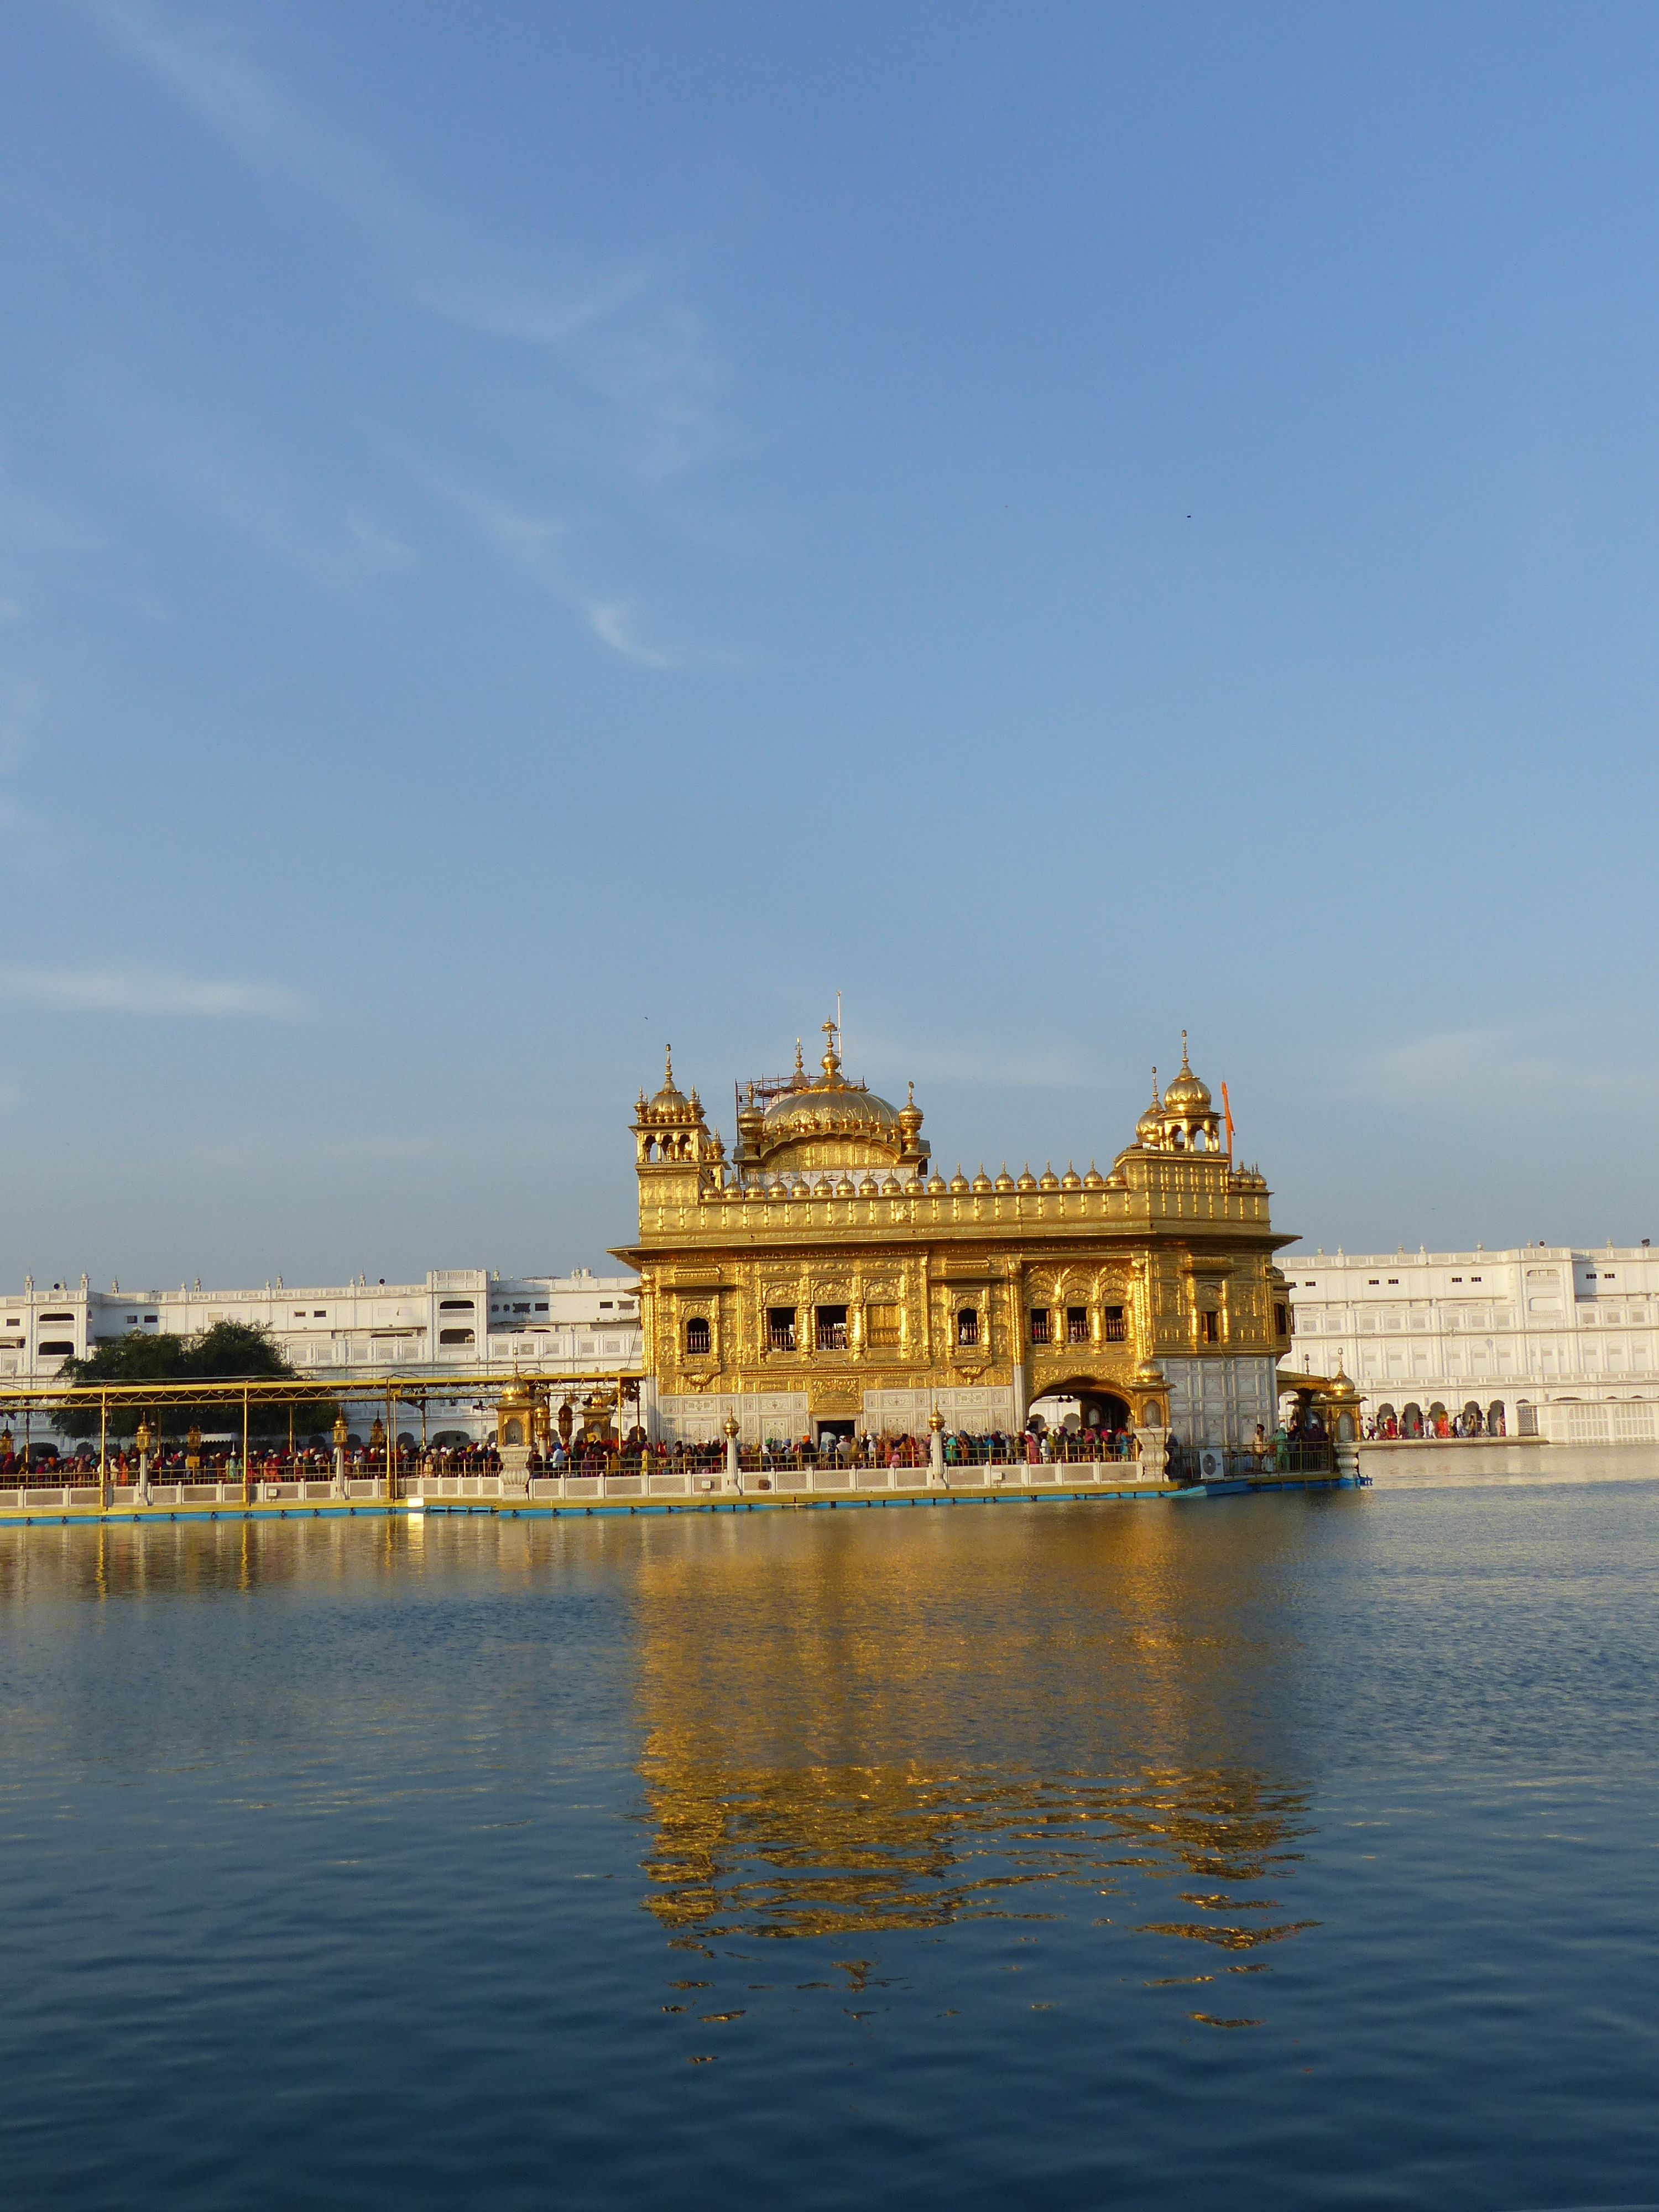 Amritsar, the Golden Temple